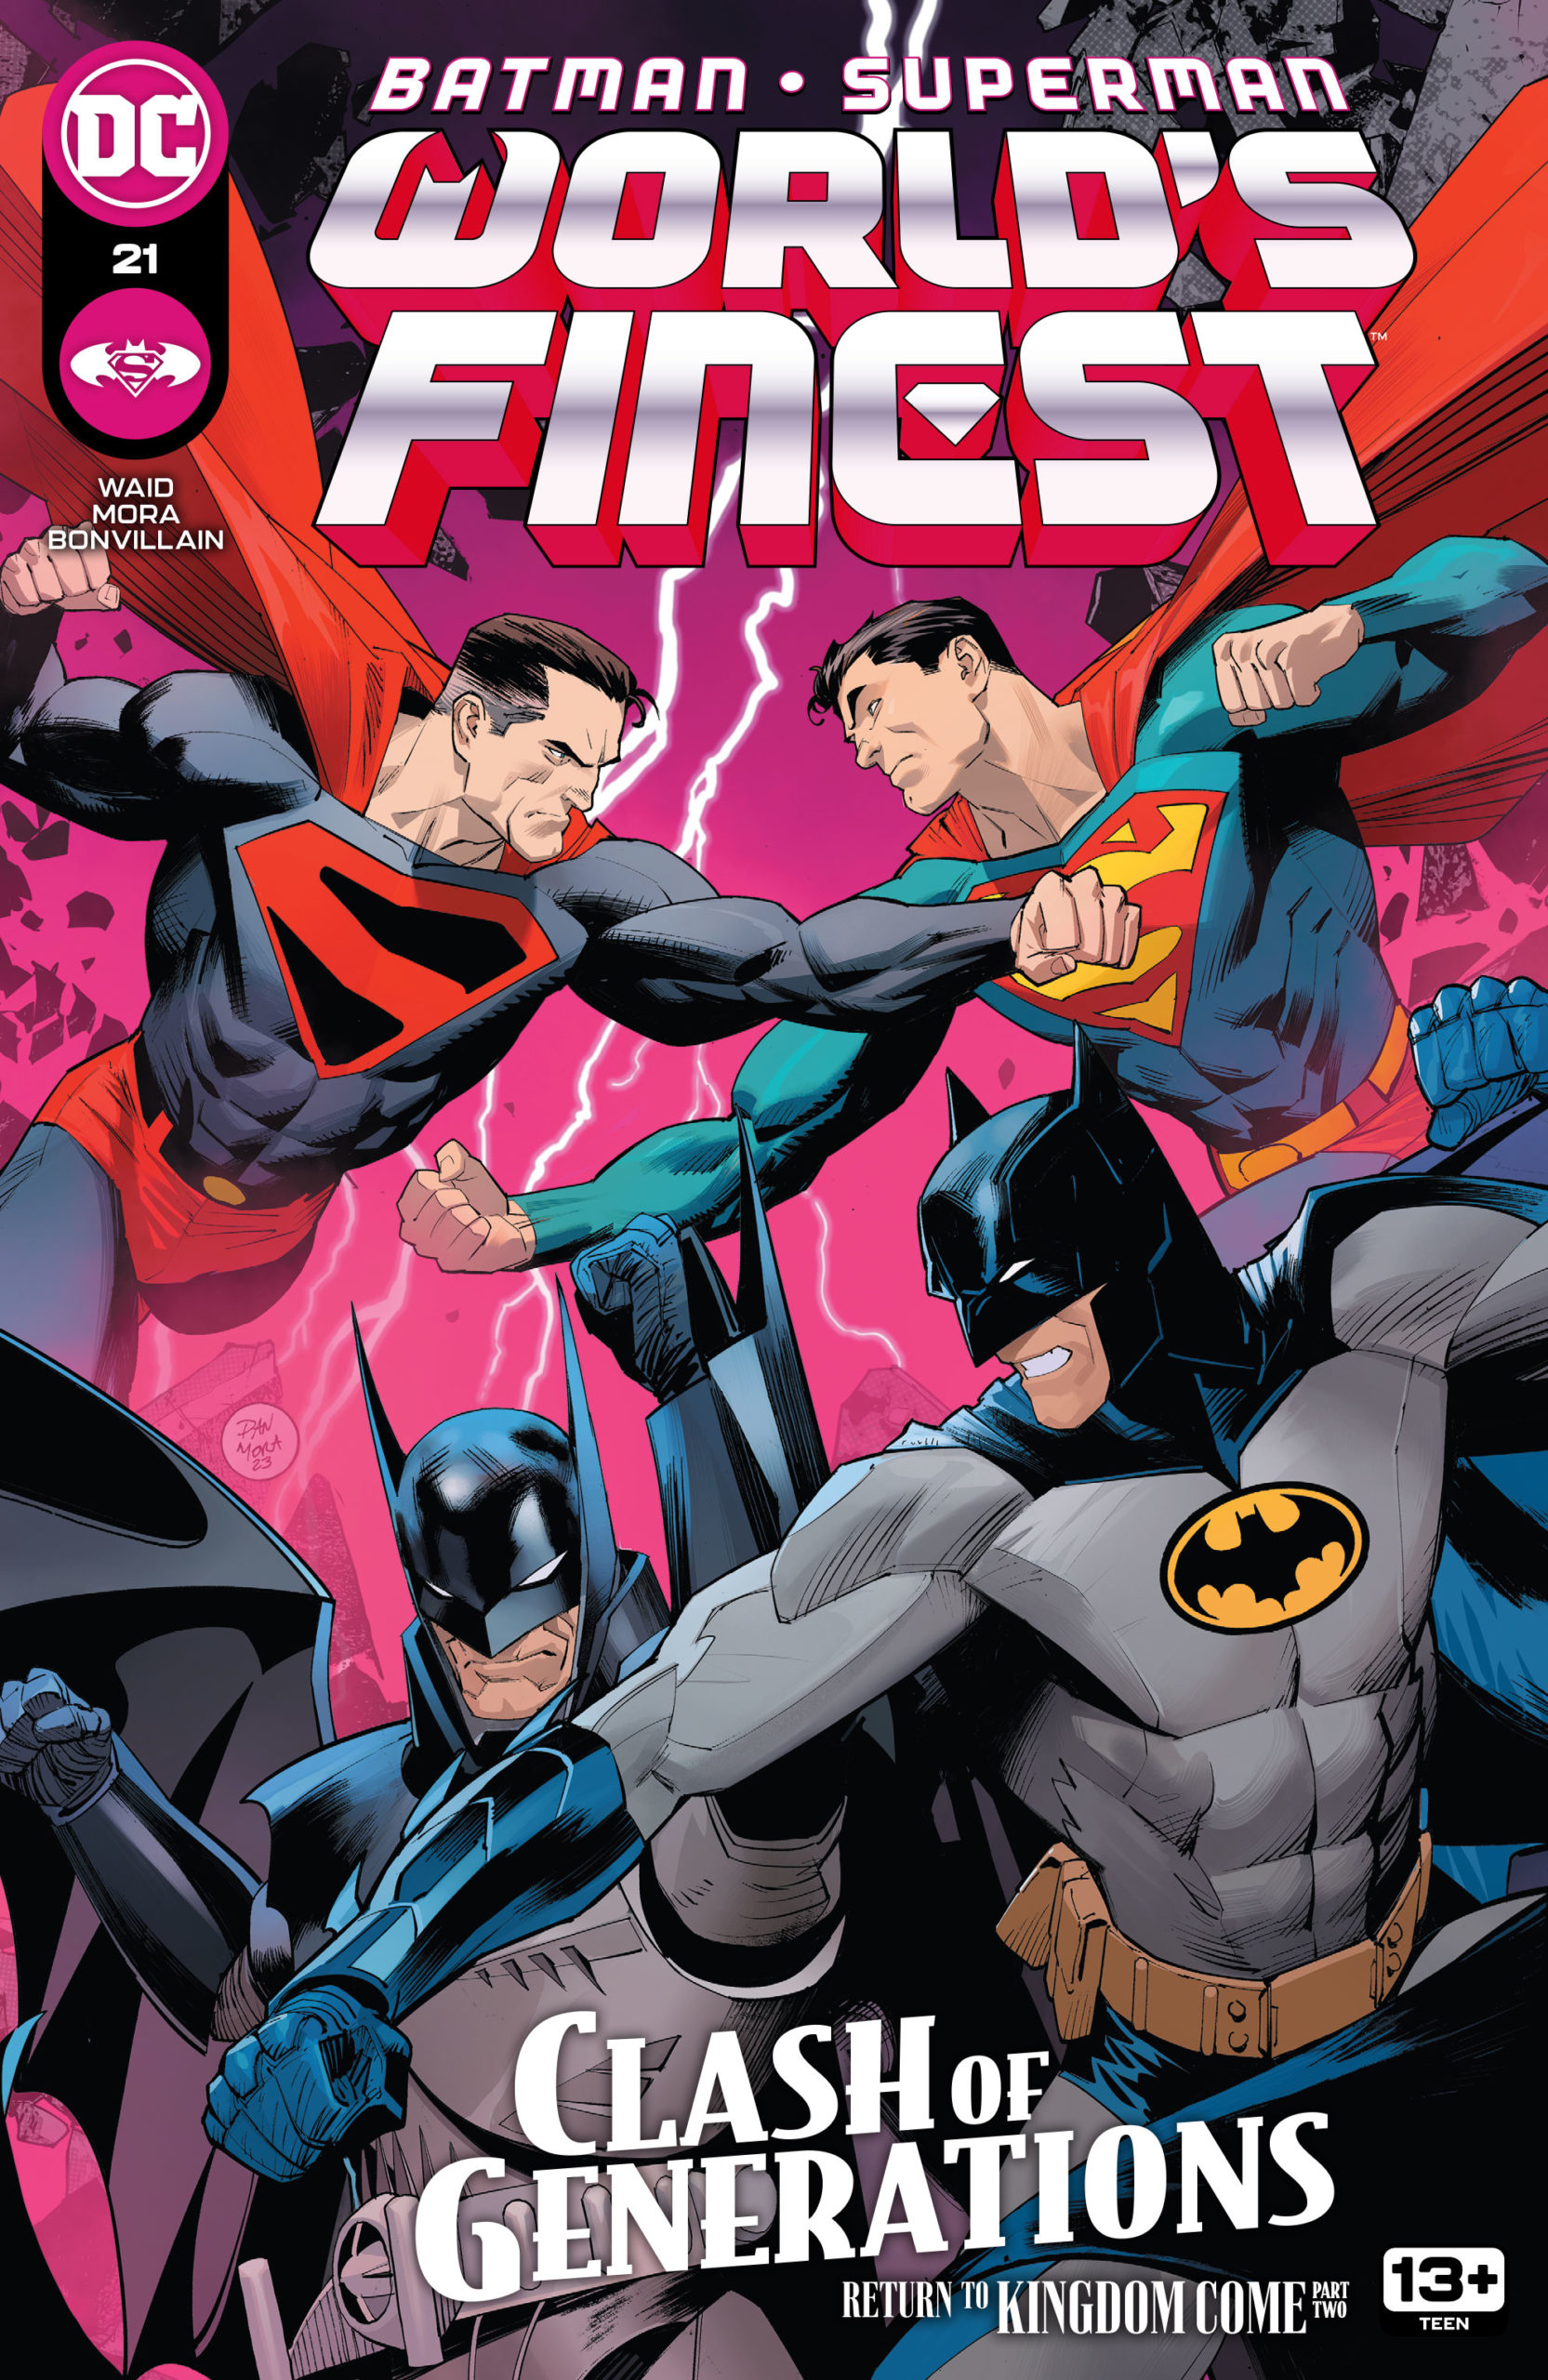 Batman Superman World's Finest #21